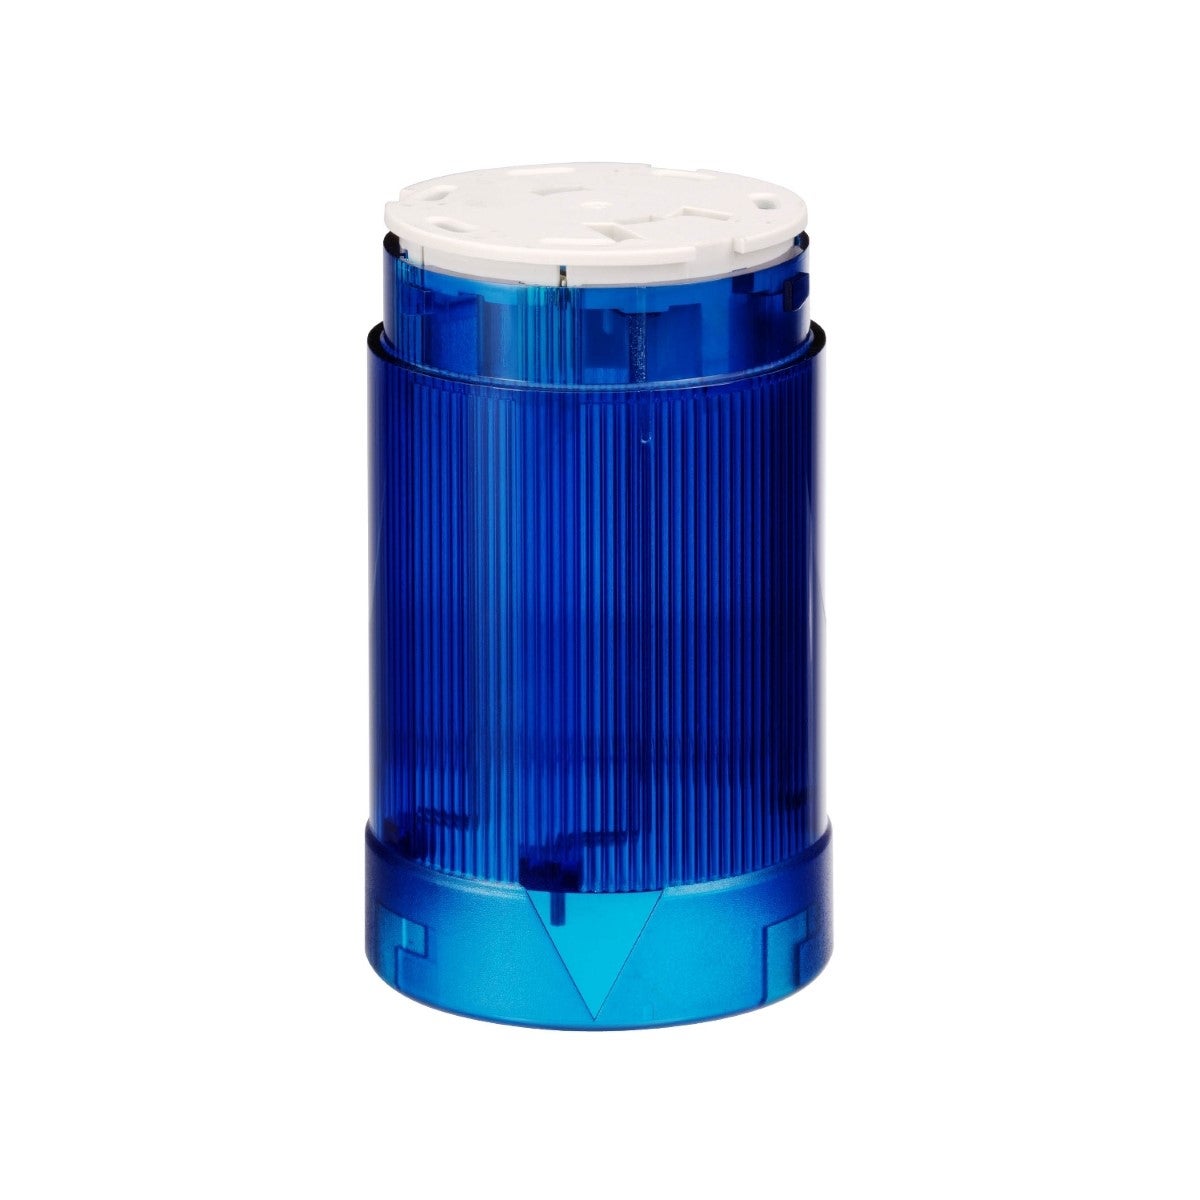 Harmony XVM, Illuminated unit for modular tower lights, plastic, blue, Ø45, for bulb BA 15d, <= 230 V AC/DC